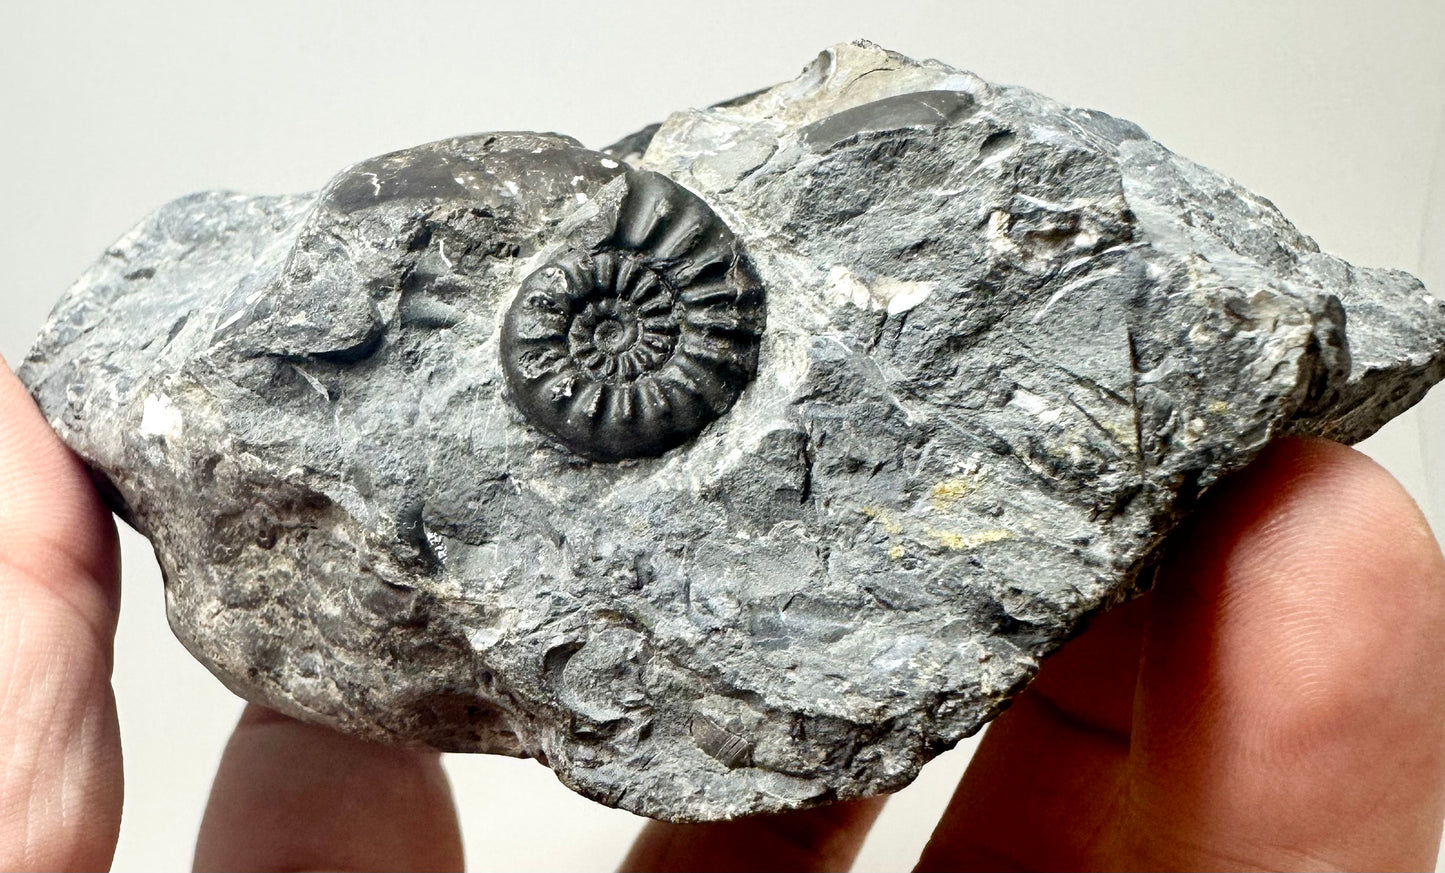 Amaltheus Subnodosus Ammonite Fossil, Jurassic coast, North Yorkshire.